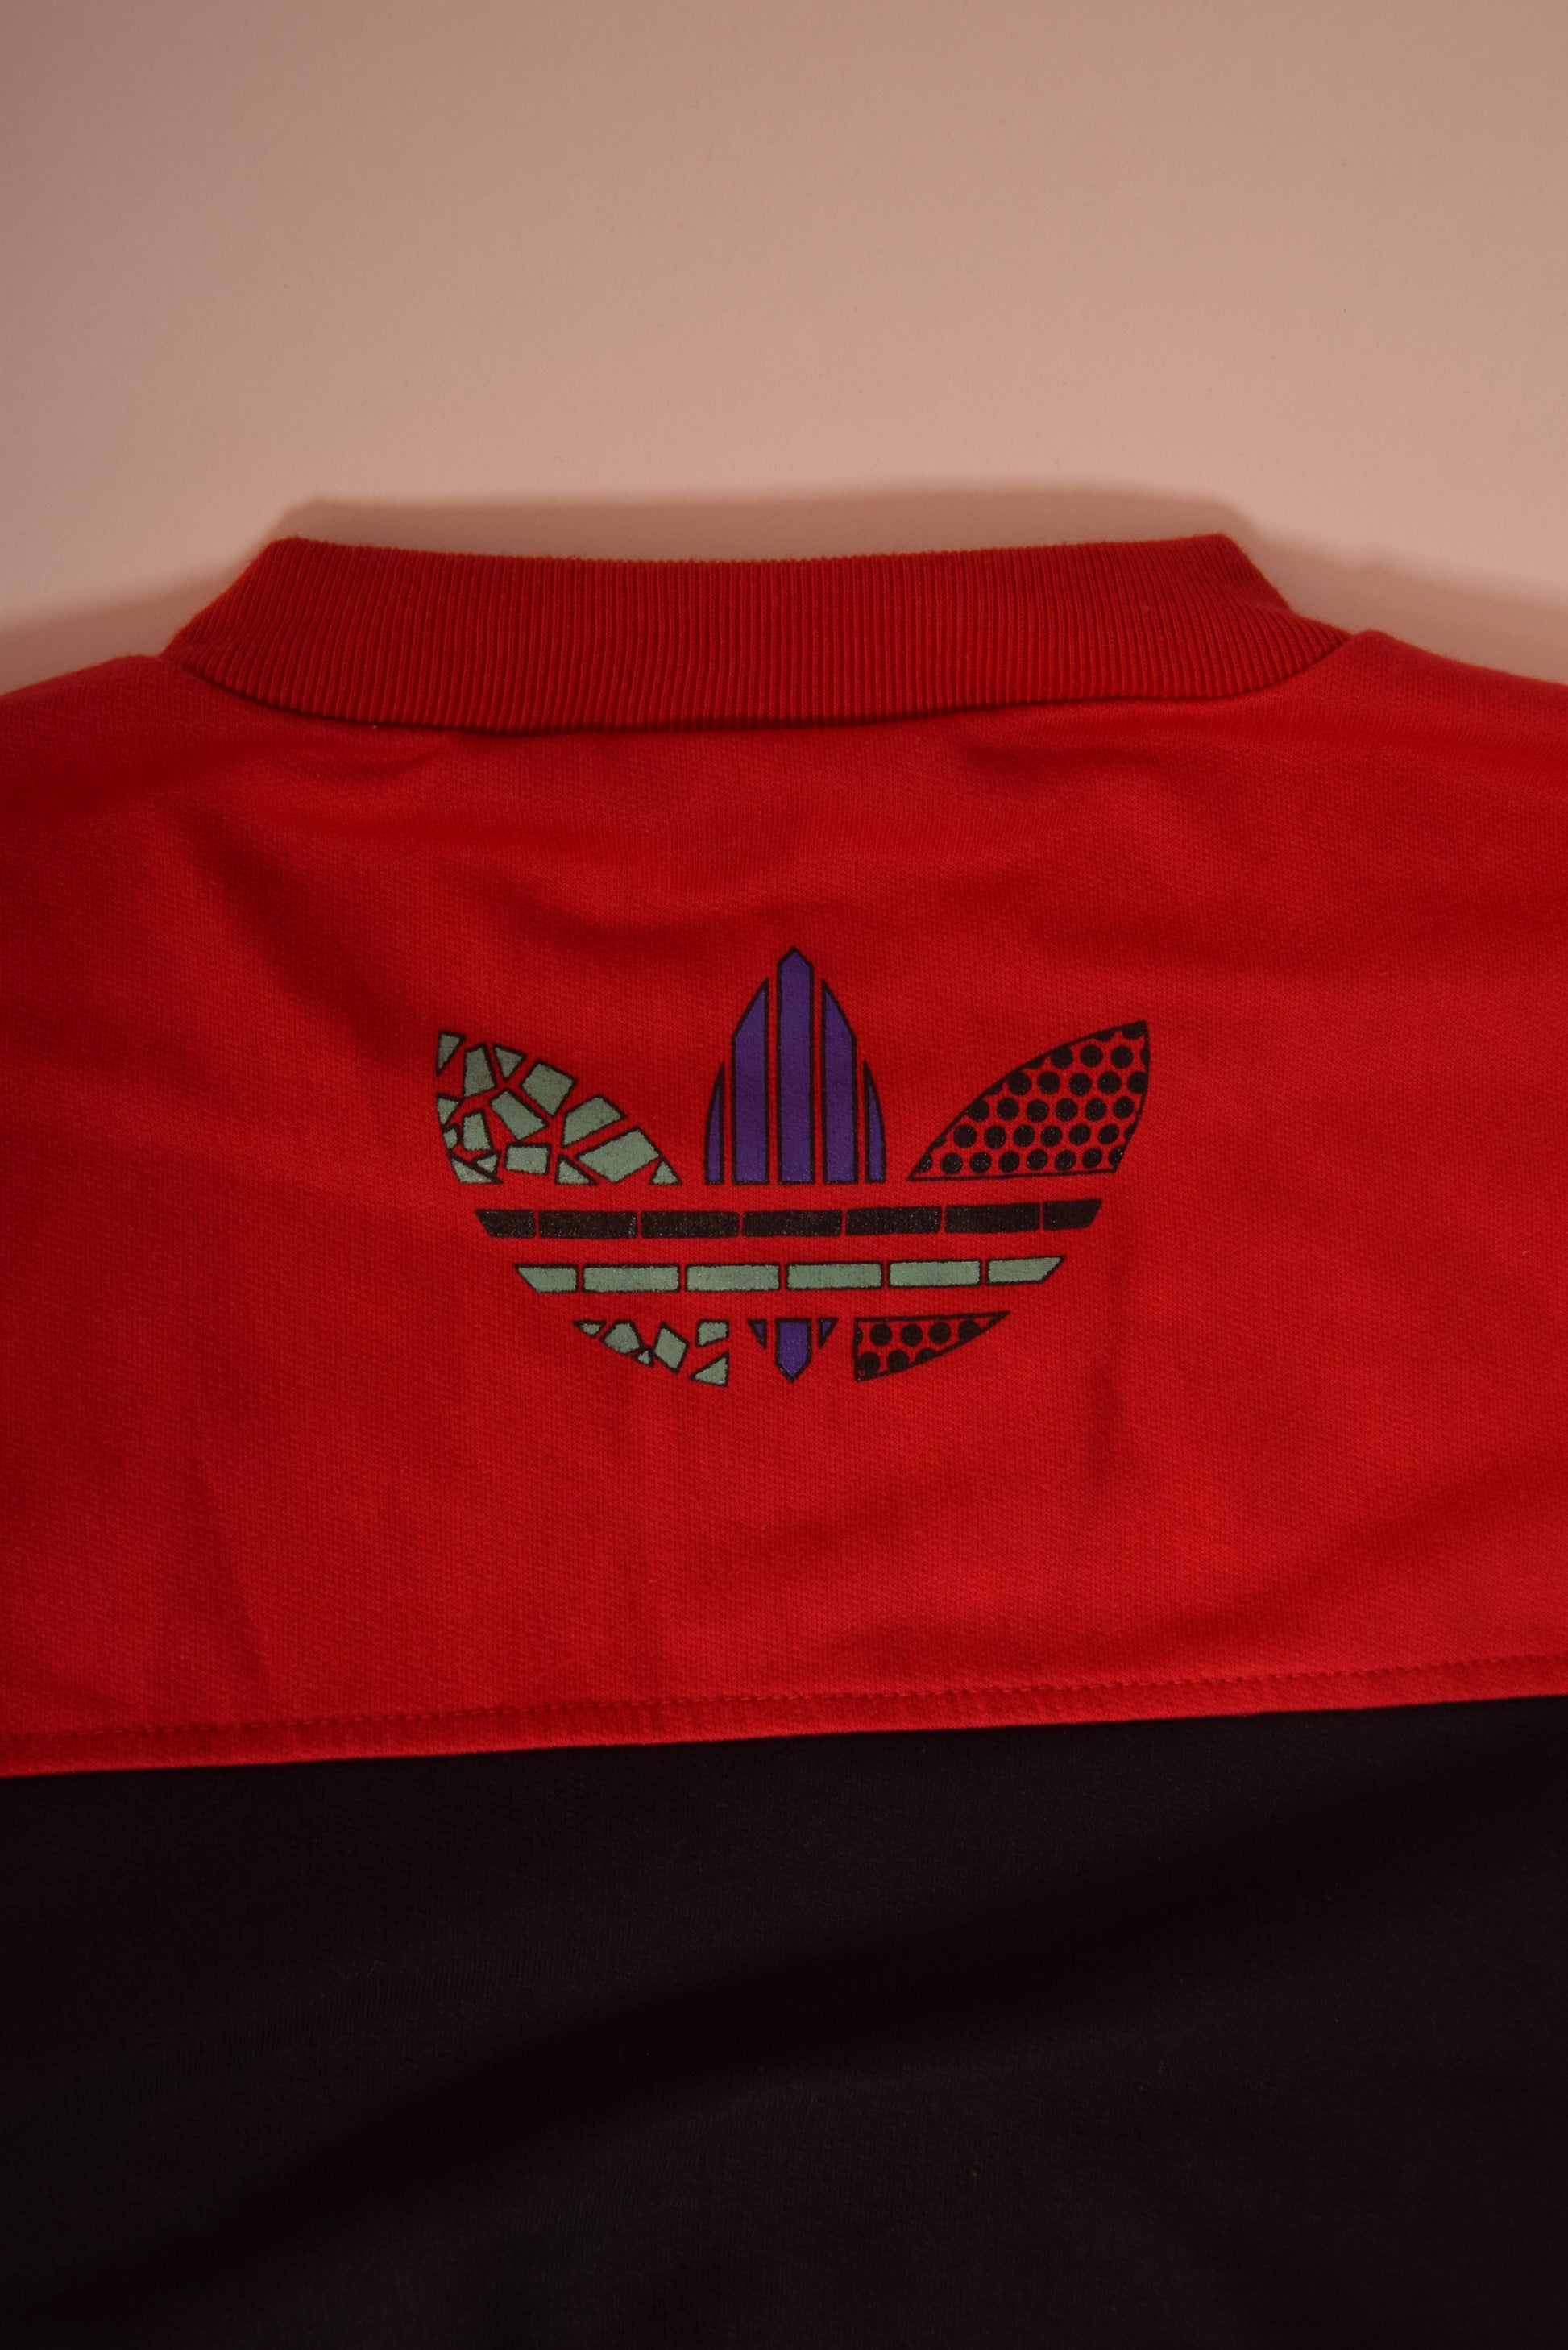 Vintage Adidas Sweatshirt Crew Neck Size L-XL Red Black Green Blue